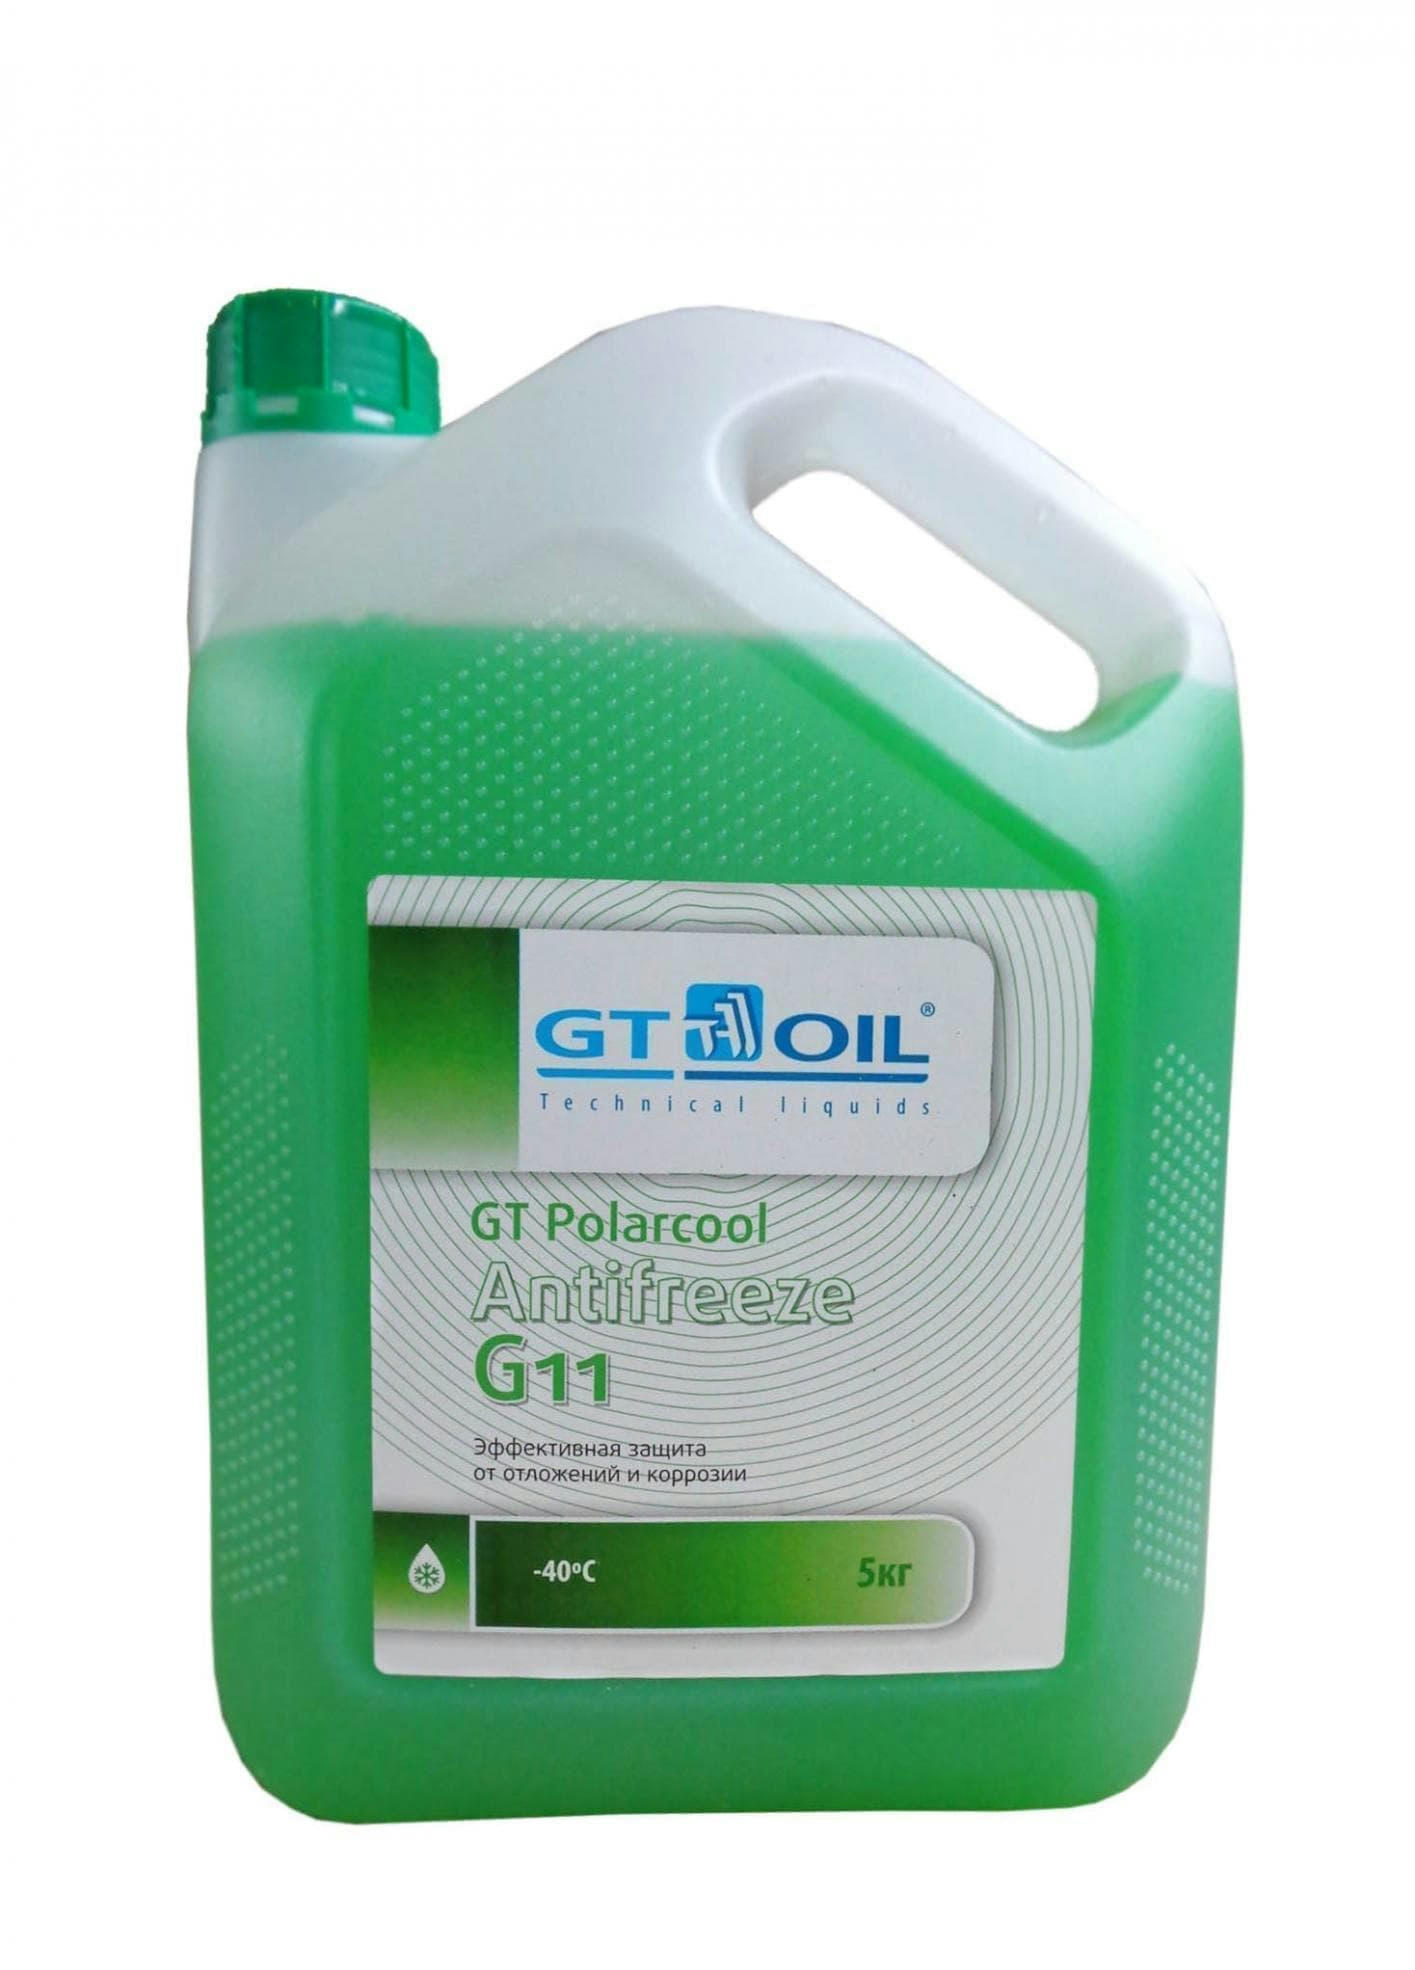 Антифриз G11 GT Polarcool готовый 5л (зеленый) артикул 1950032214014